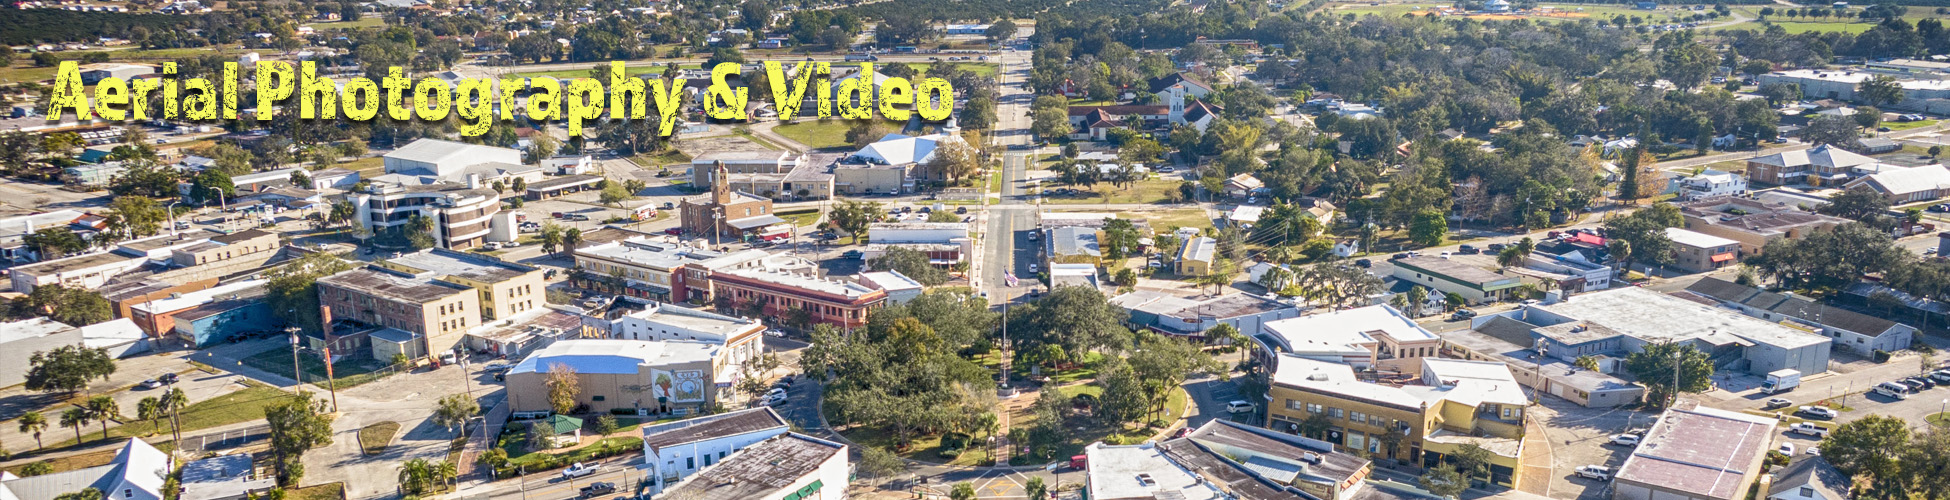 Aerial Photo of the Sebring Cirle Downtown Sebring, Florida